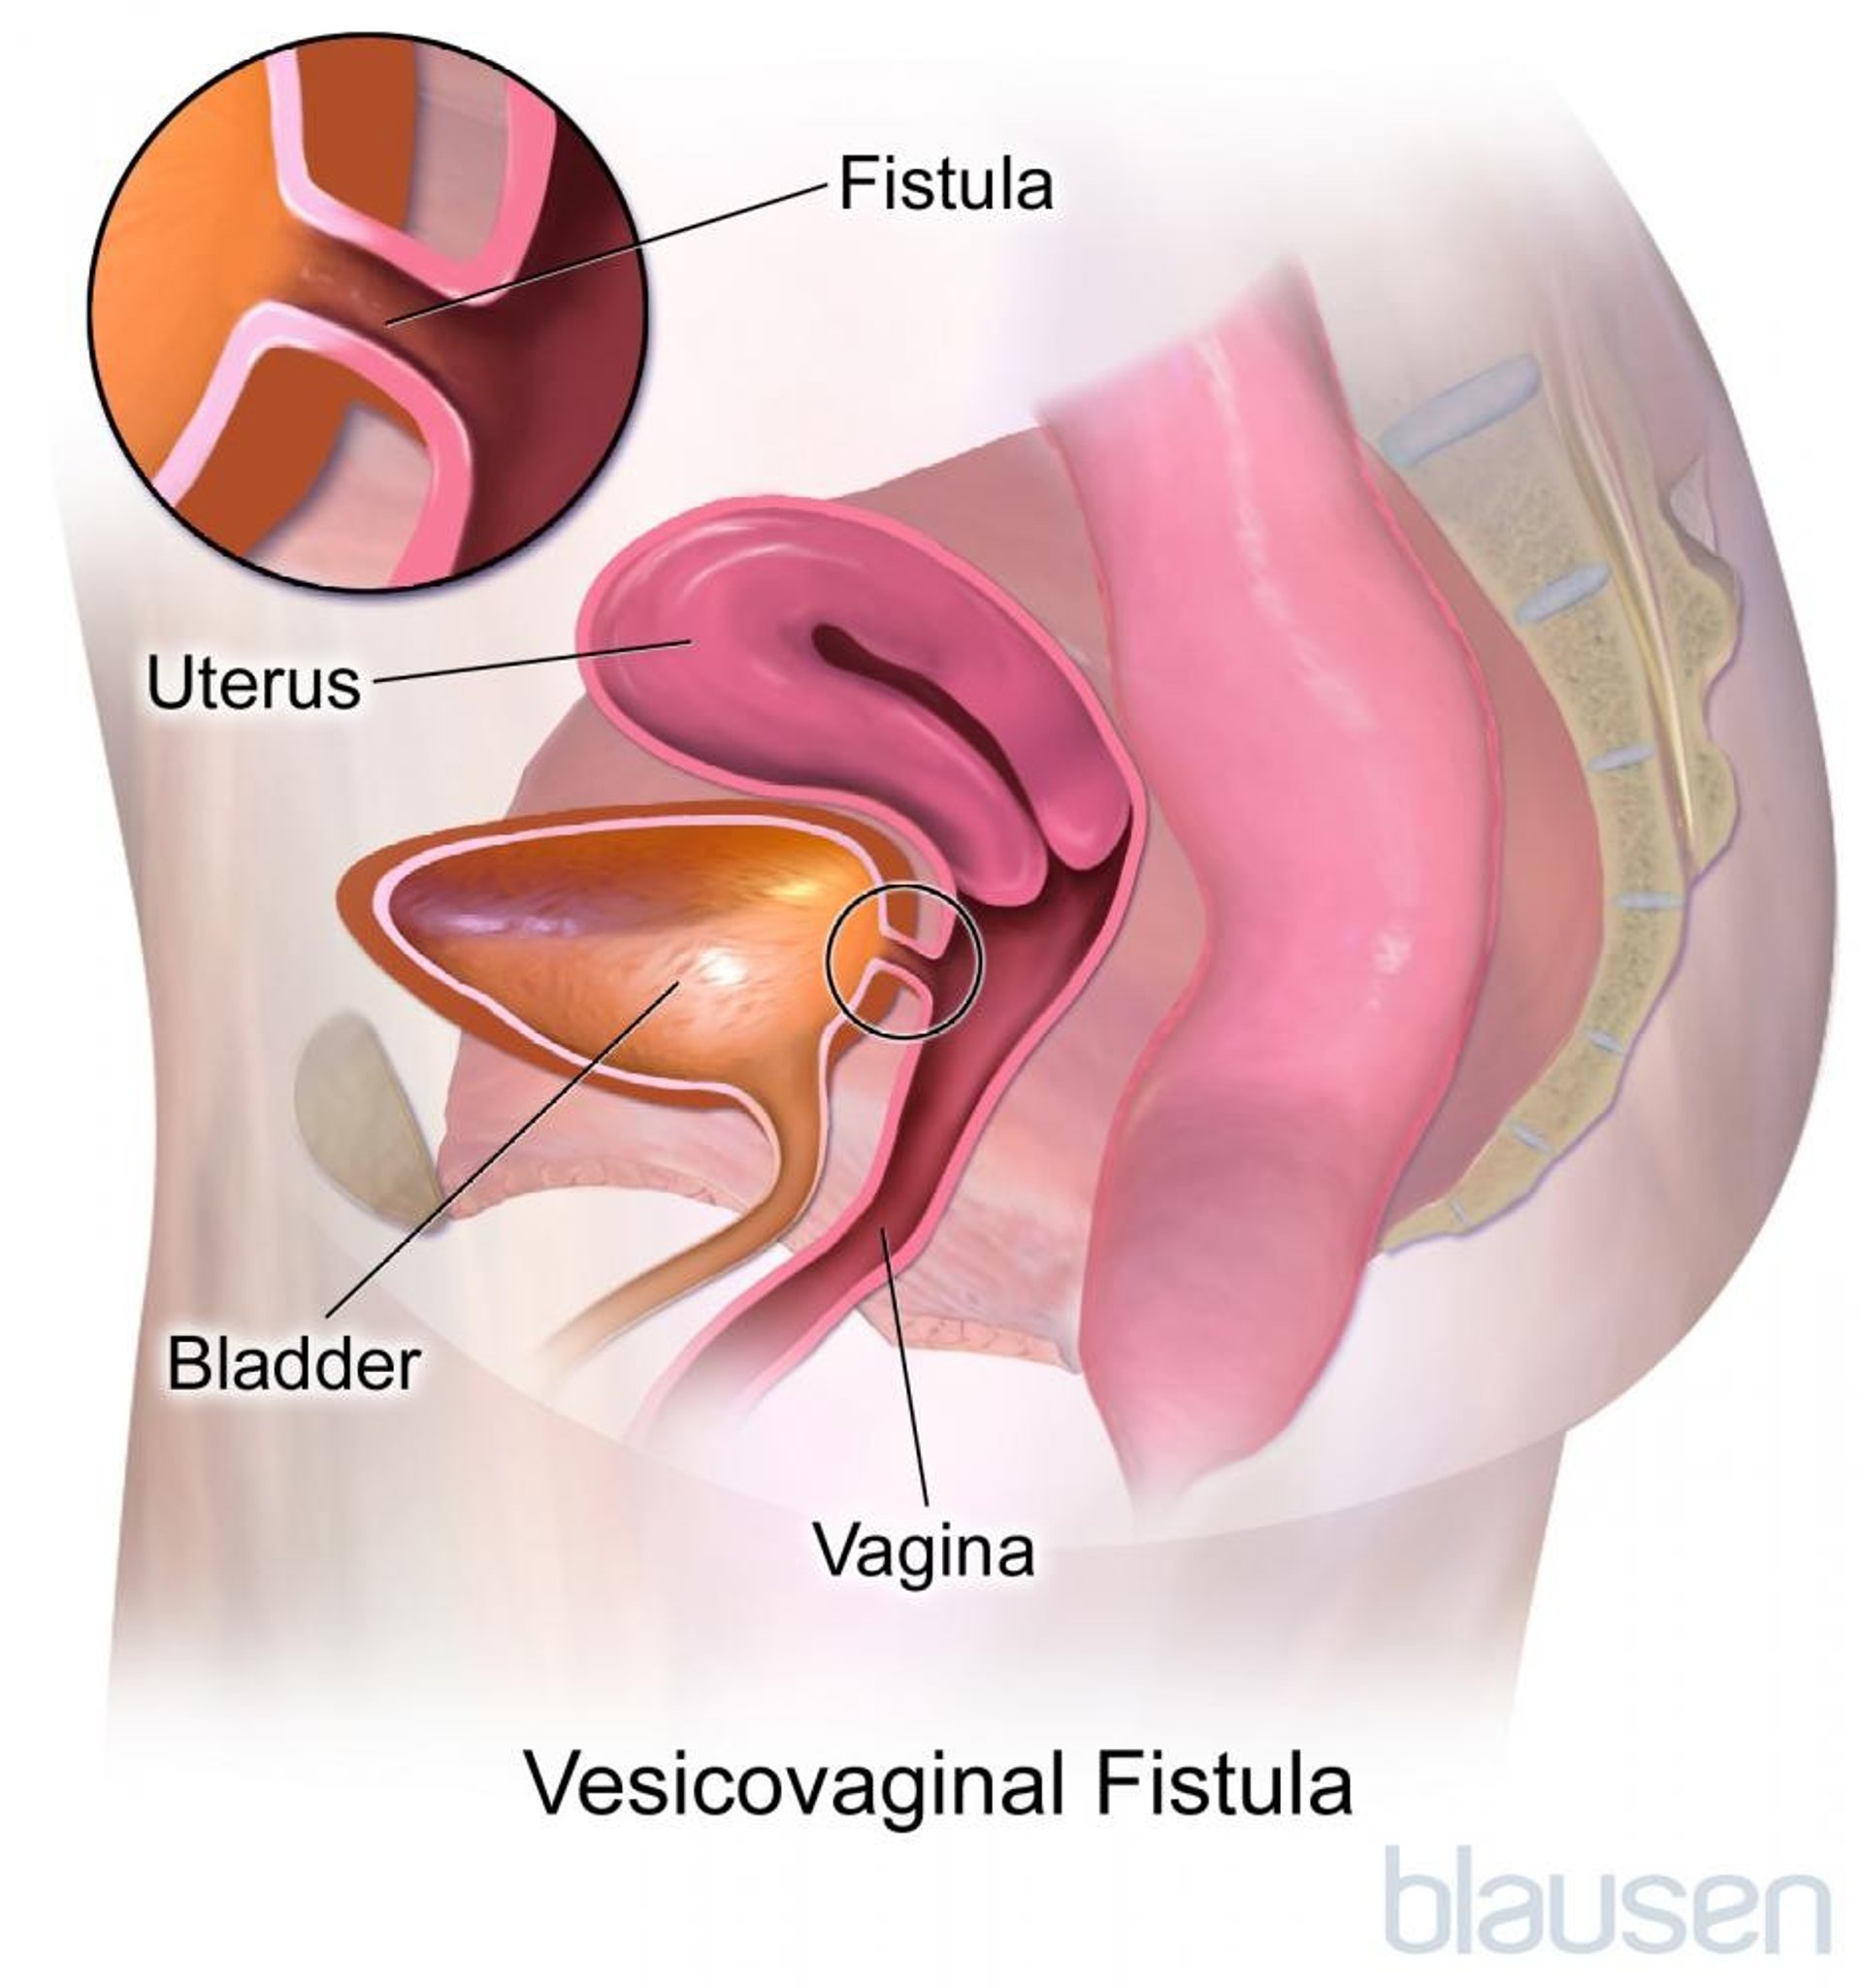 Vesicovaginal Fistula